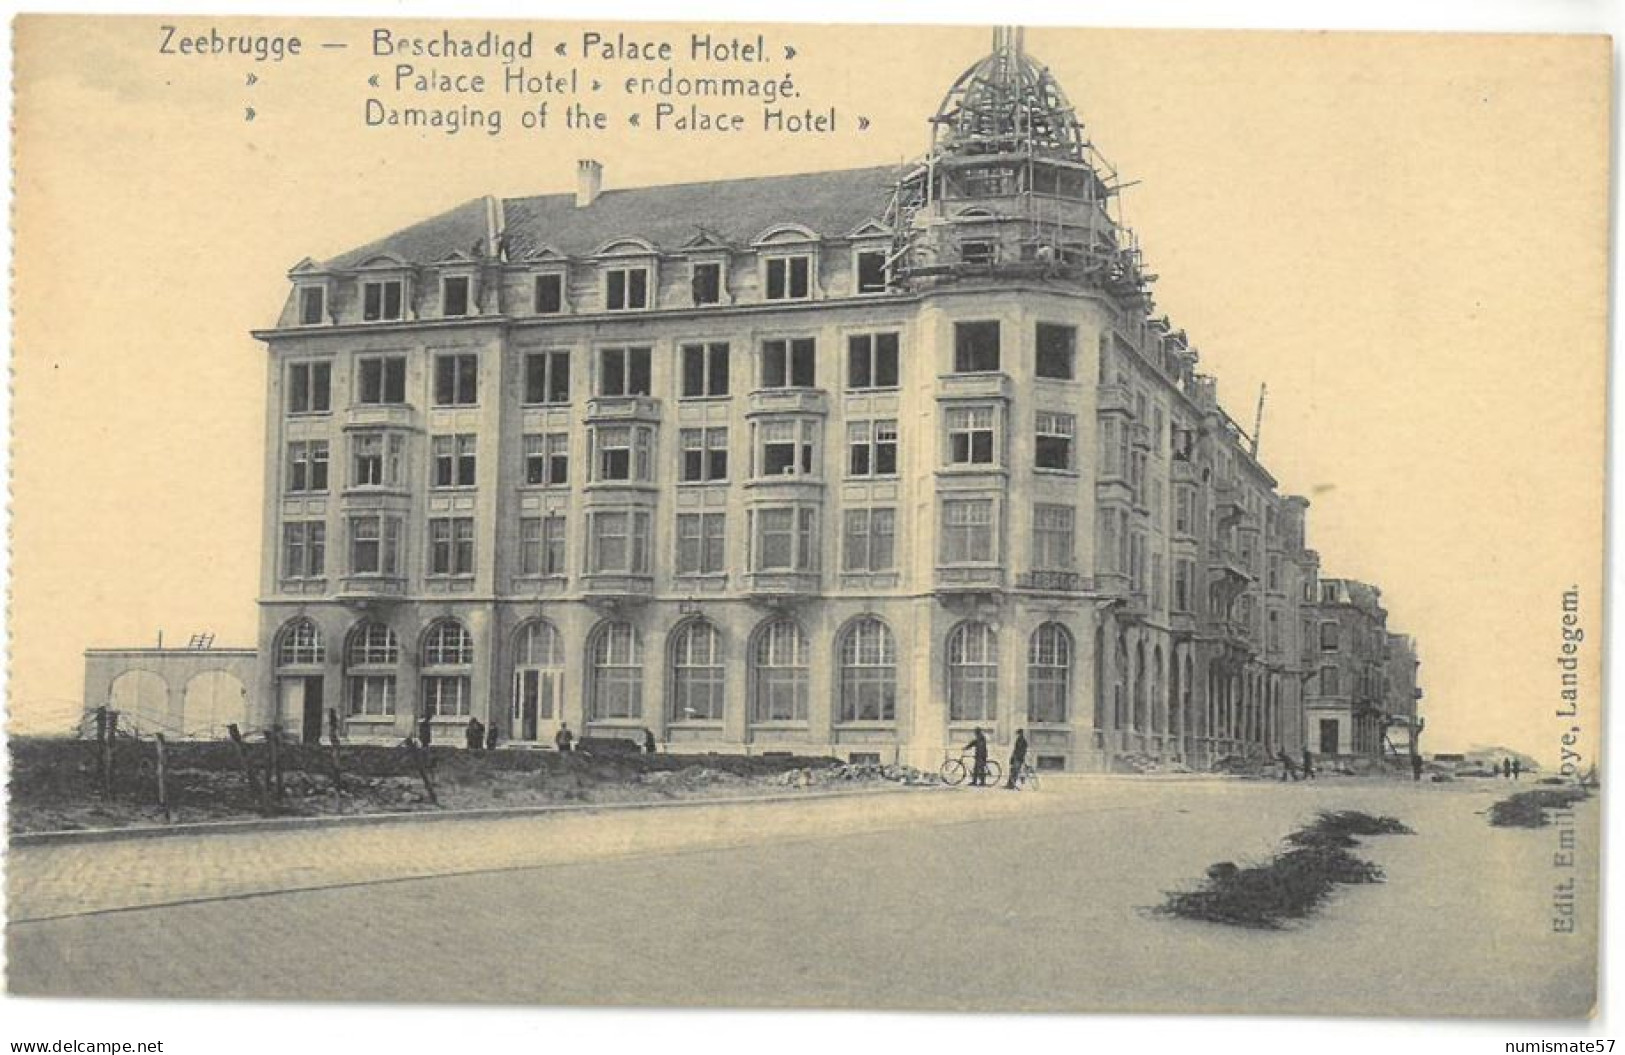 CPA ZEEBRUGGE - Palace Hôtel Endommagé - Beschadigd Palace Hotel - Zeebrugge